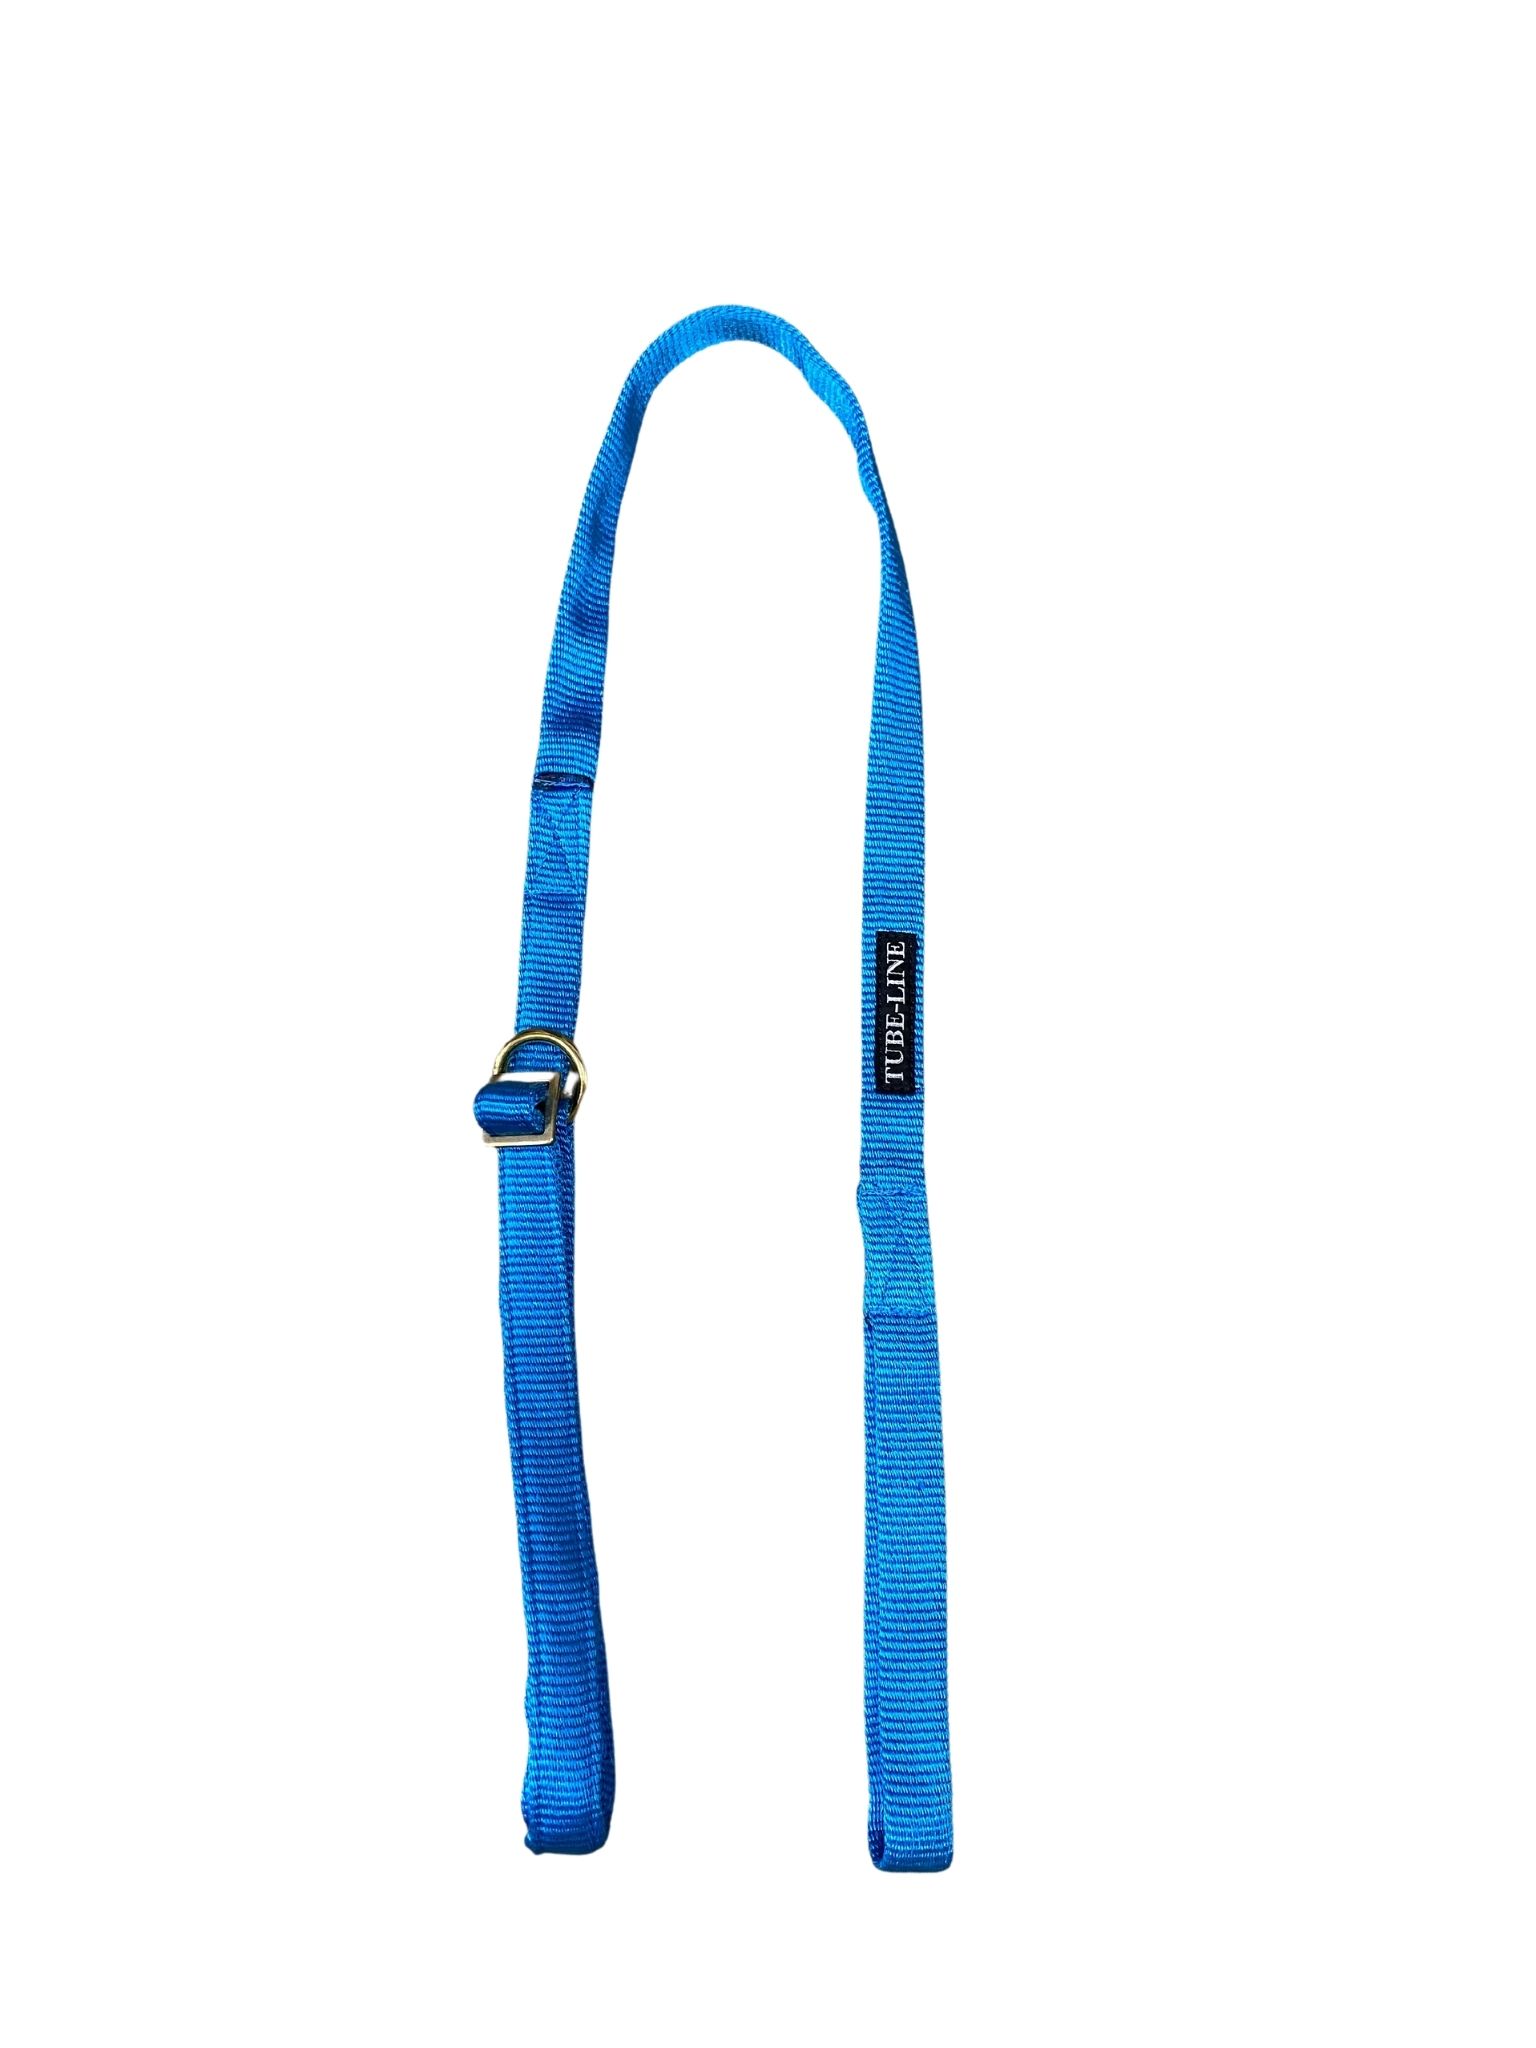 Afbeelding Leiband Hond – Jachtleiband Tube Line blauw